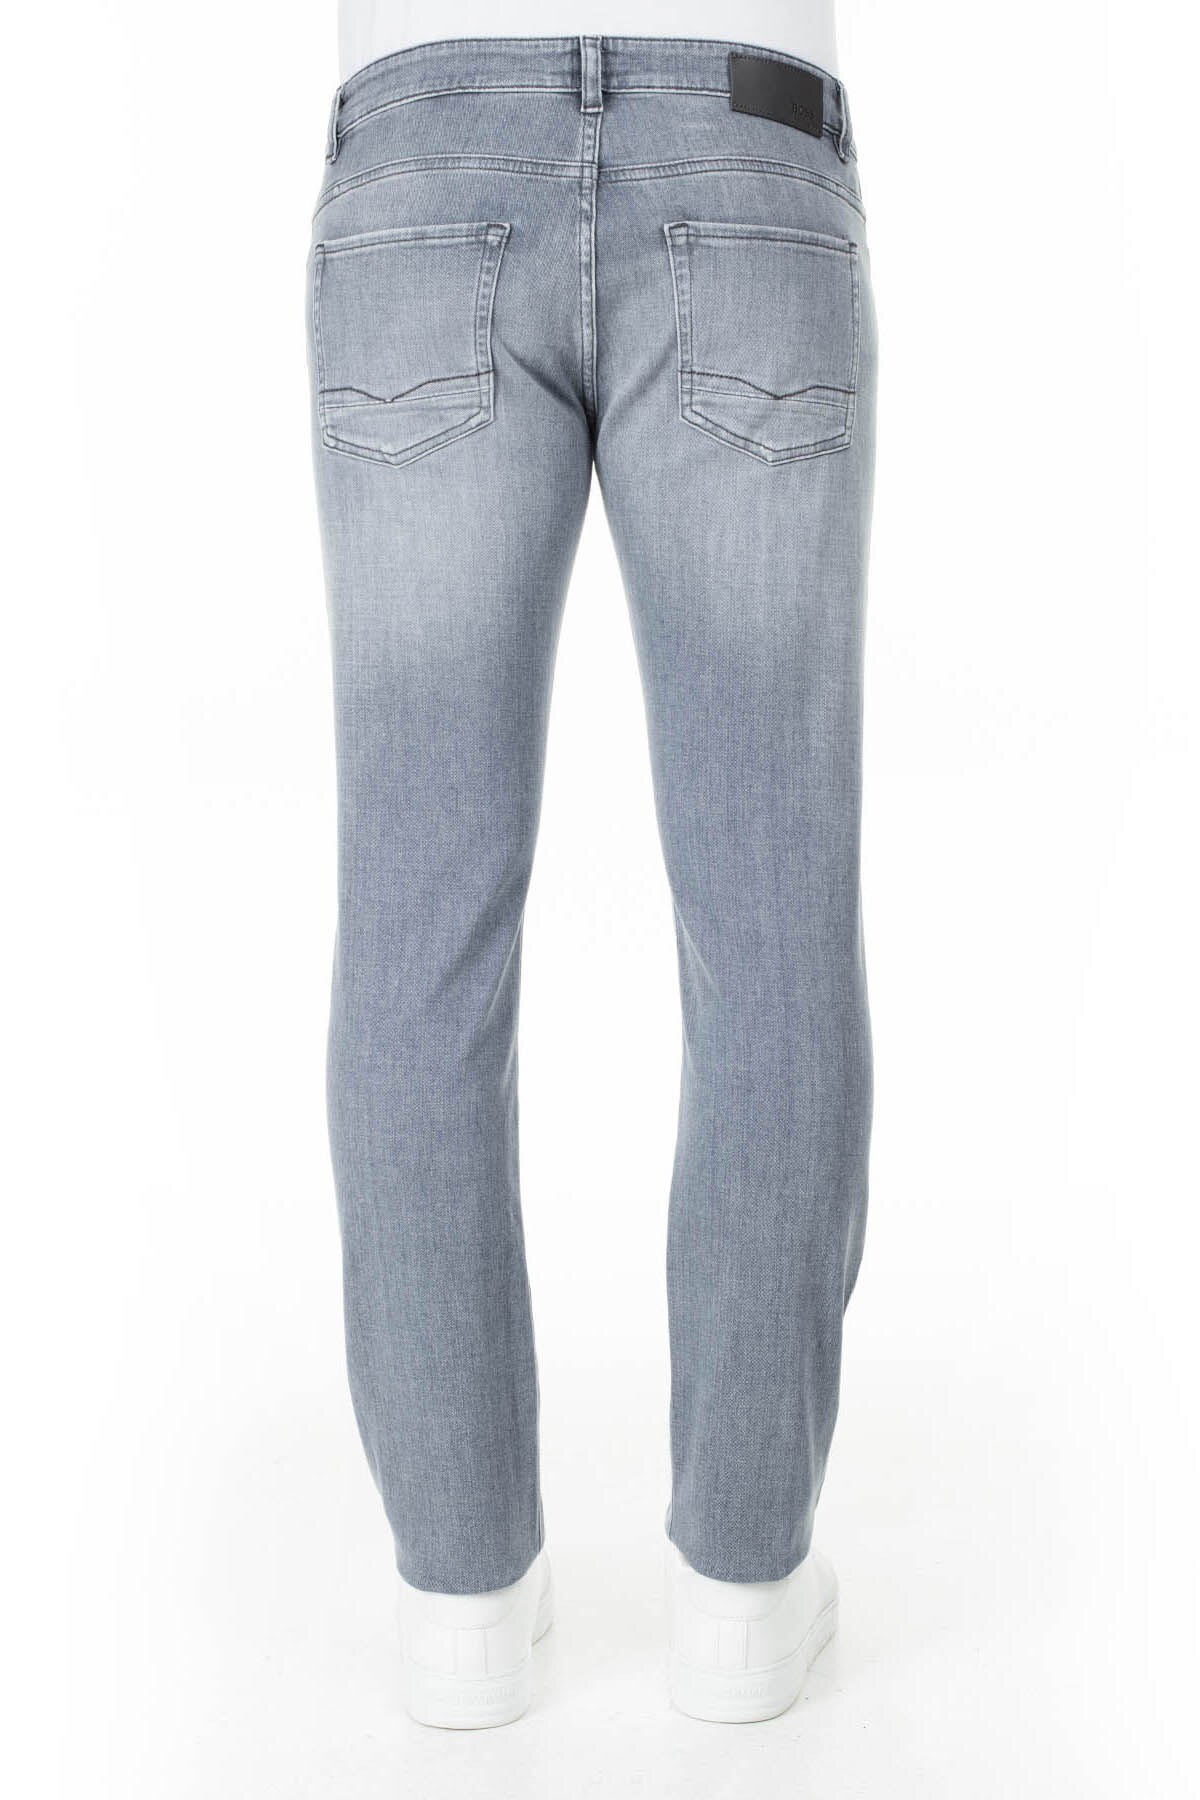 Hugo Boss Slim Fit Jeans Erkek Kot Pantolon 50426423 050 GRİ